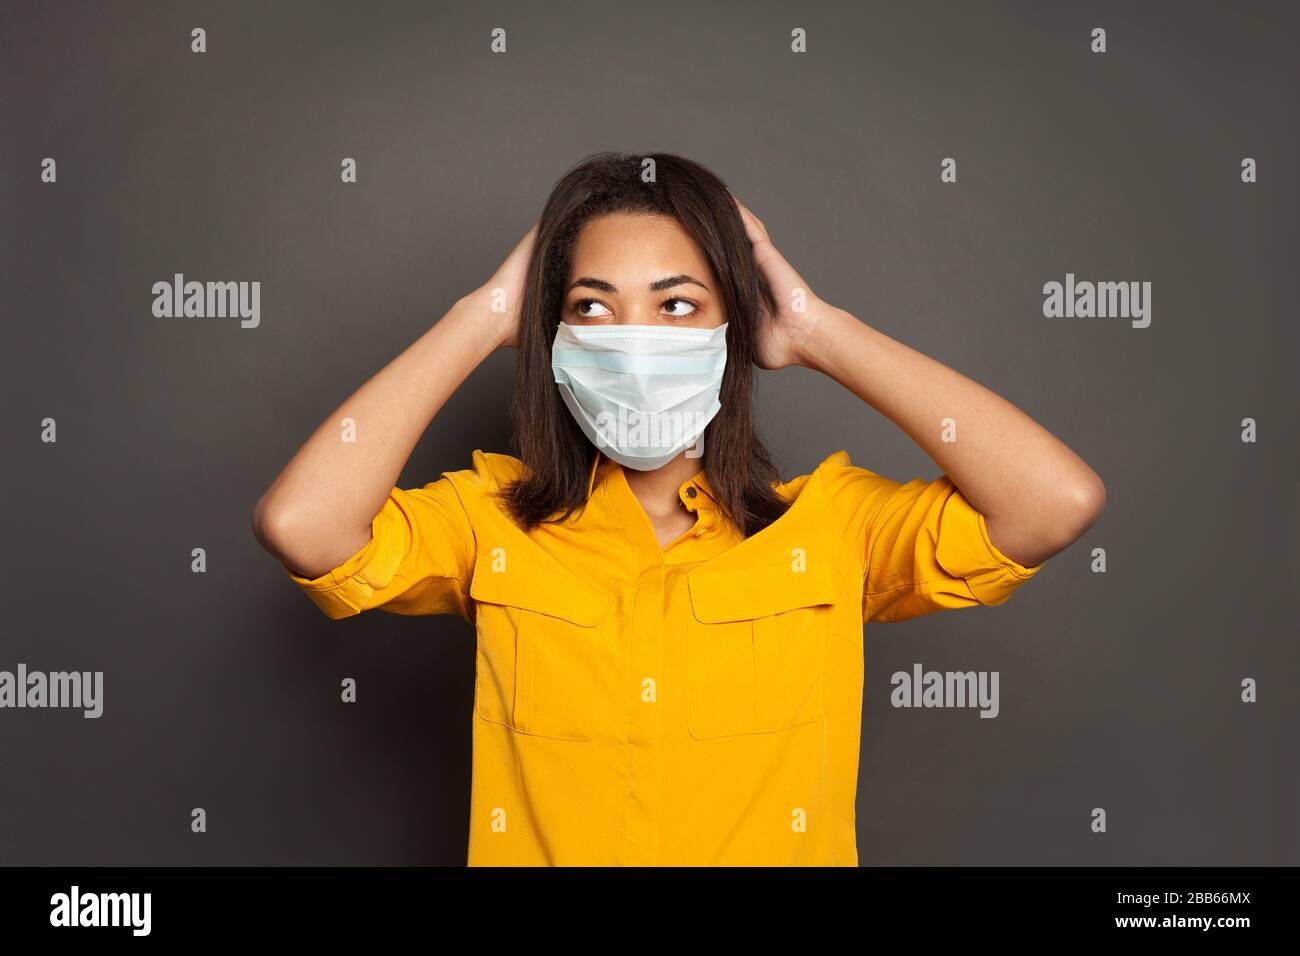 Concepto de protección contra epidemias y virus. Mujer afroamericana en pánico en máscara de cara sobre gris Foto de stock